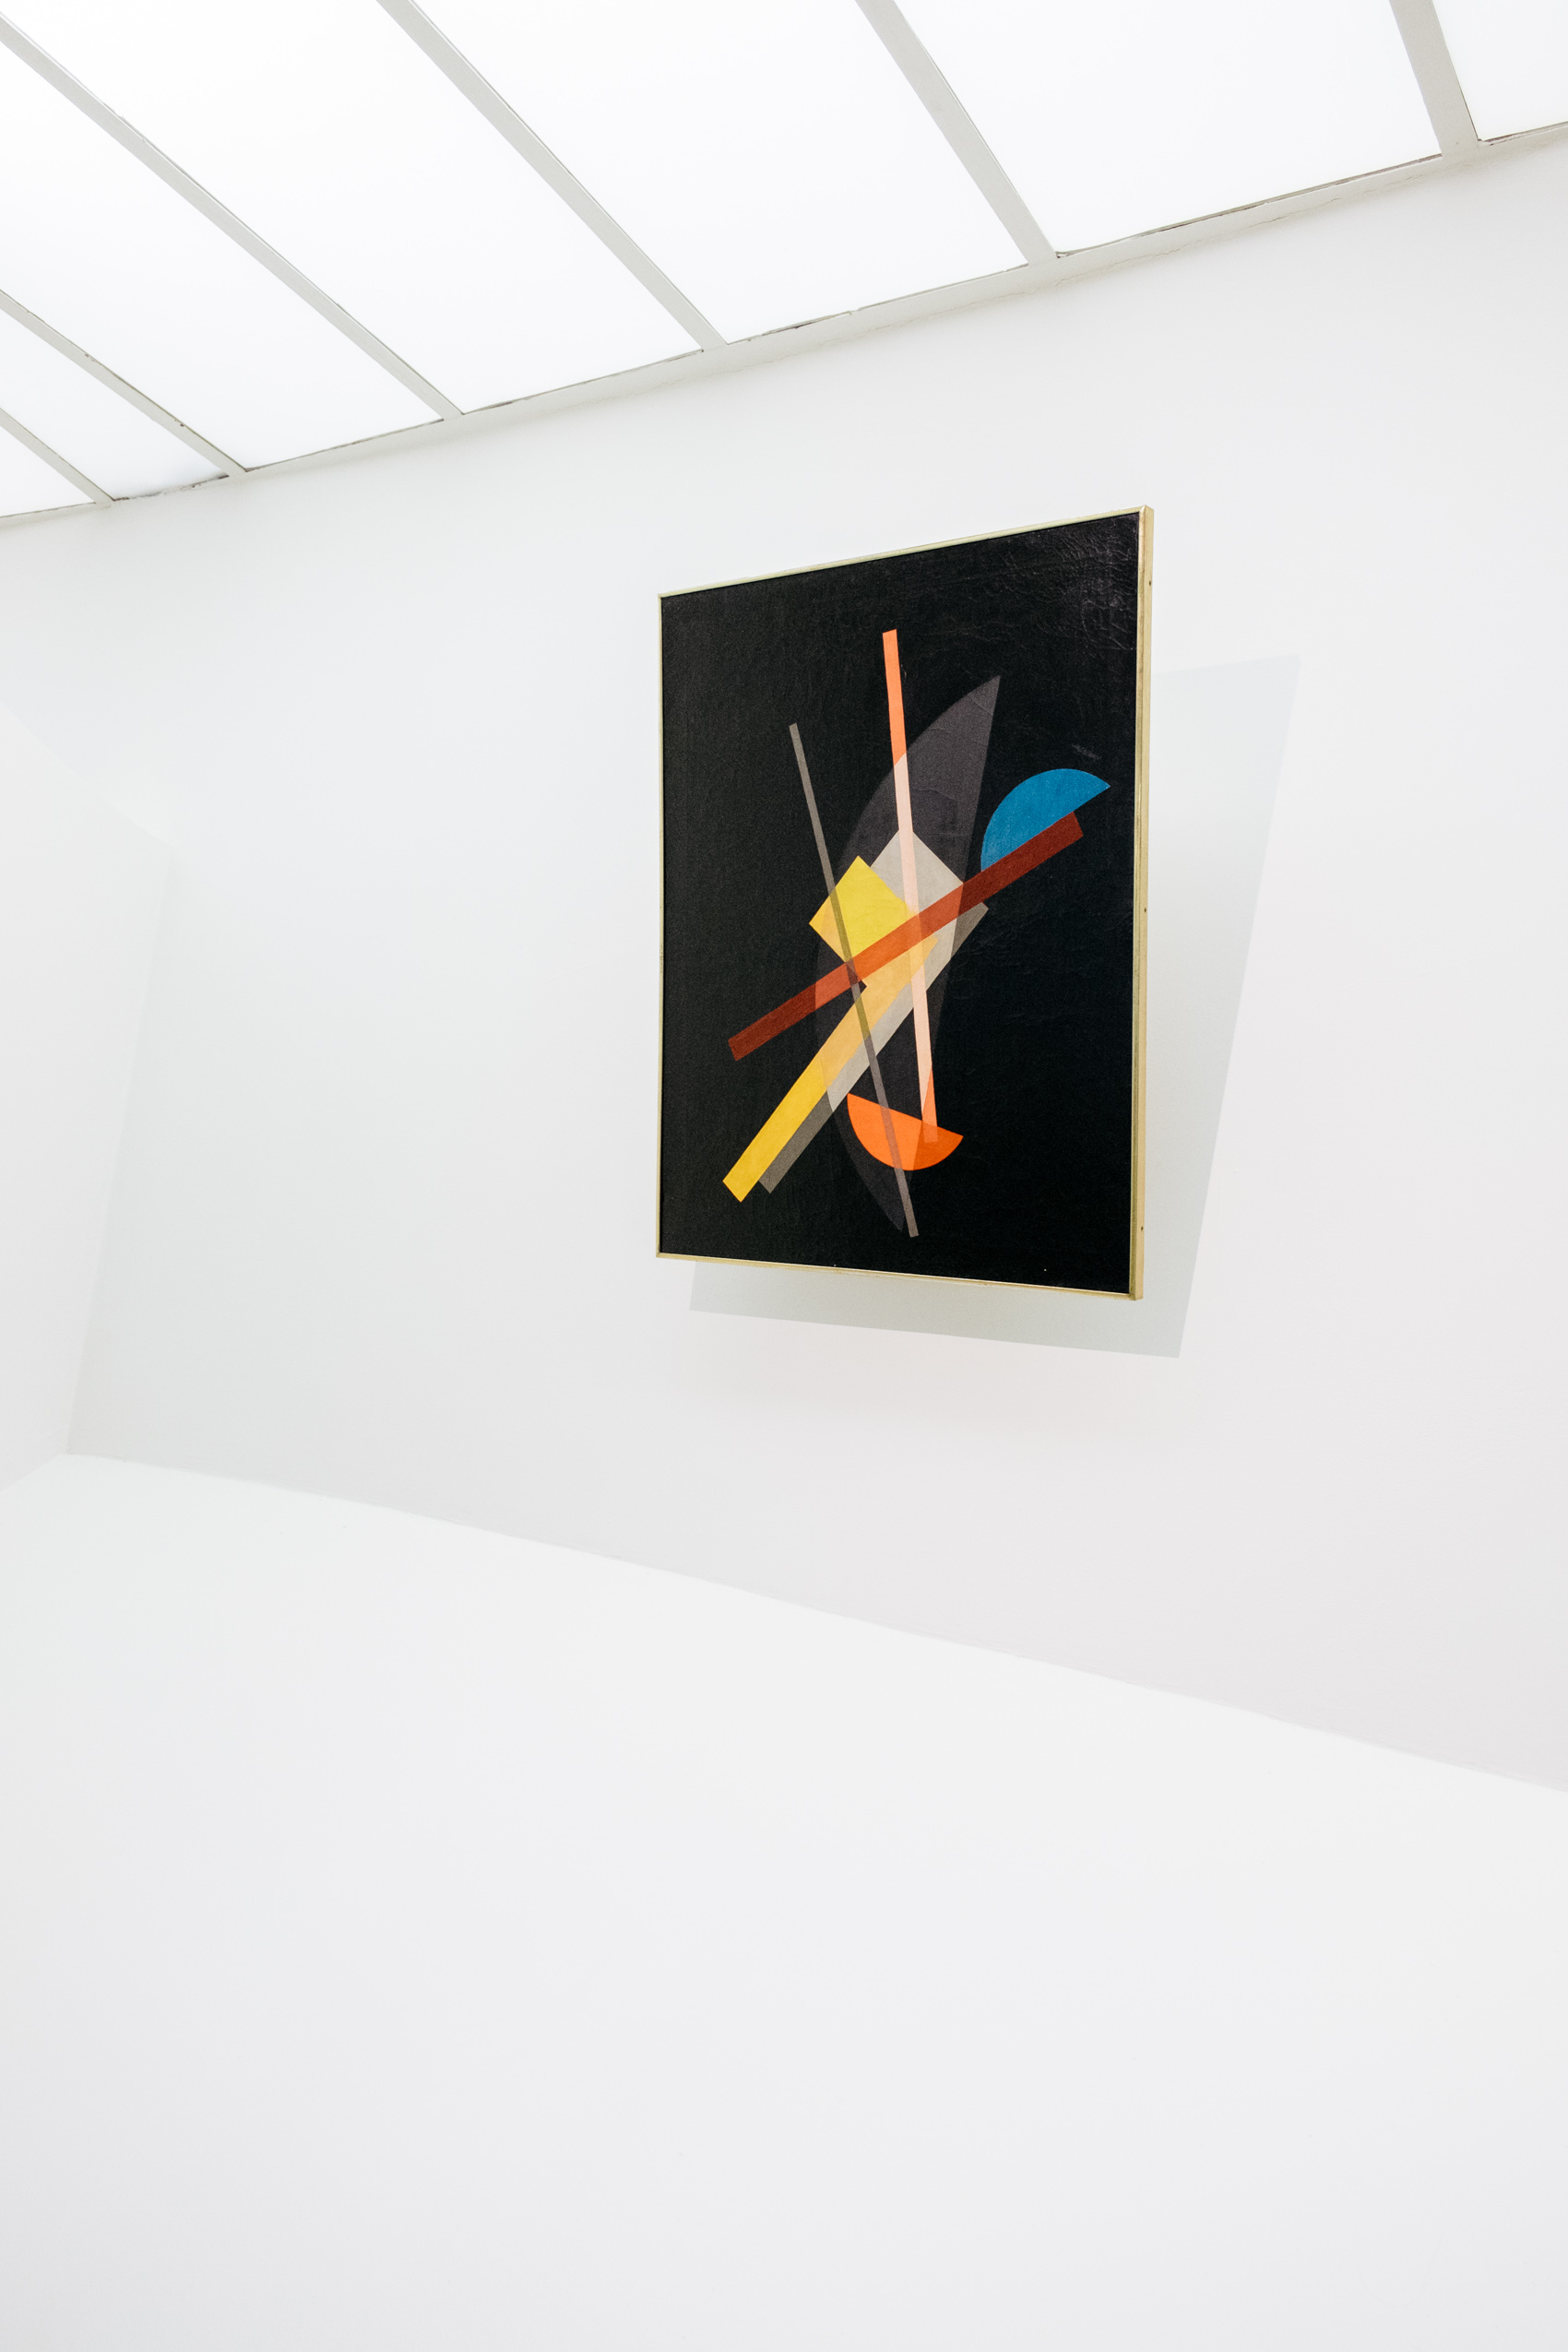 Lazlo Moholy-Nagy exhibition in New York